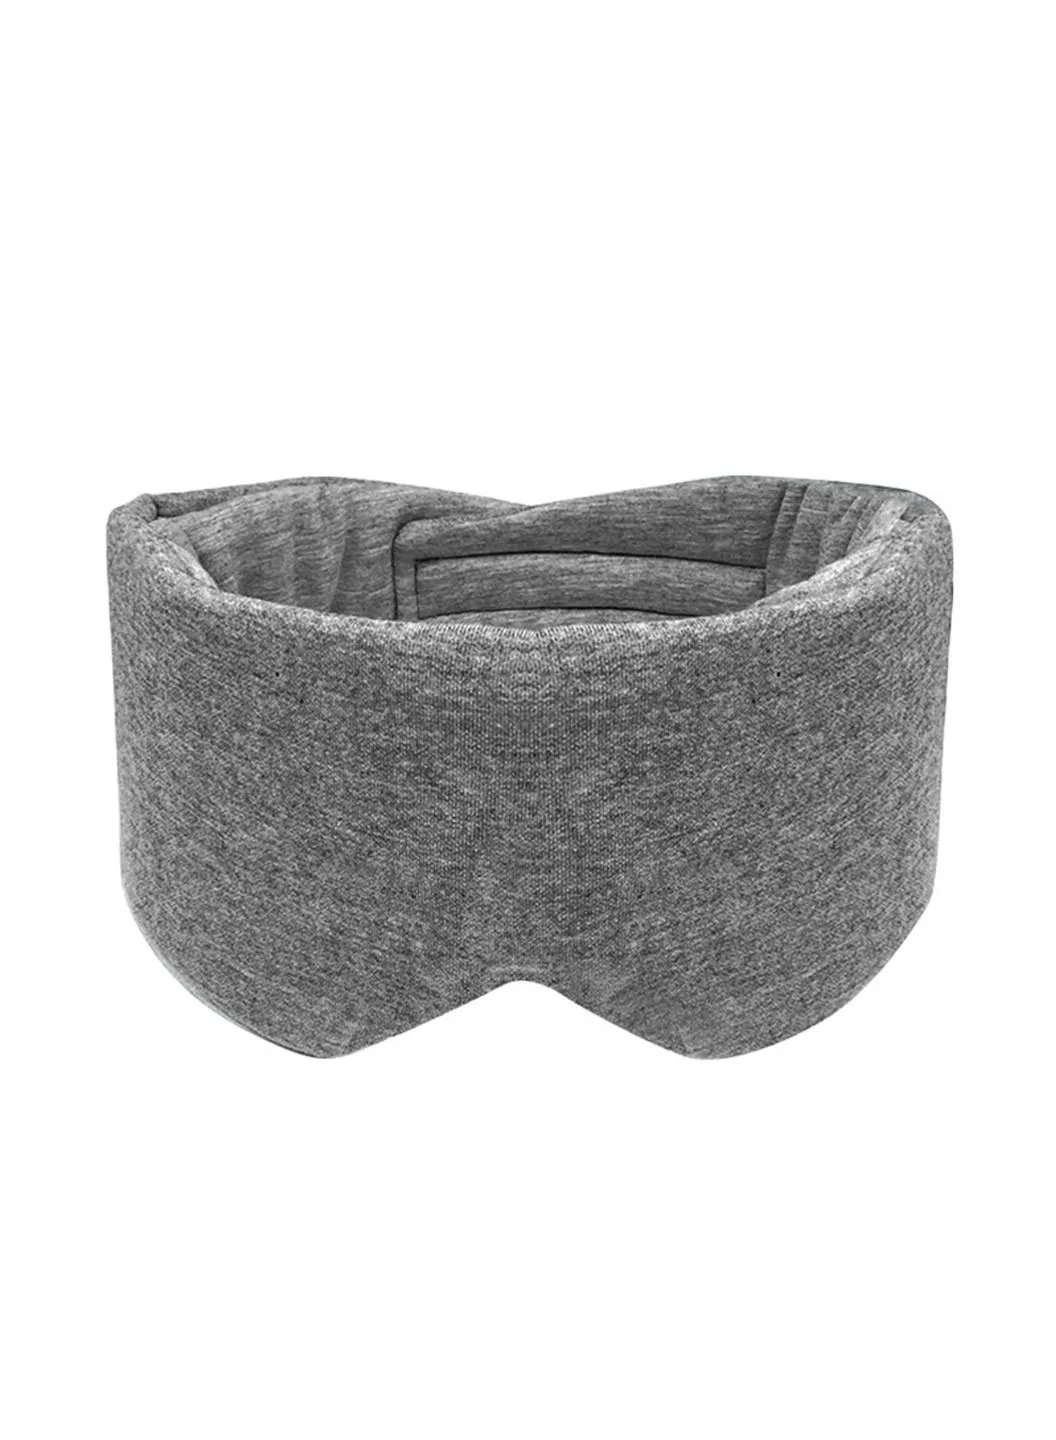 LEOKOR Cotton Blindfold Cover Sleeping 3D Eye Mask